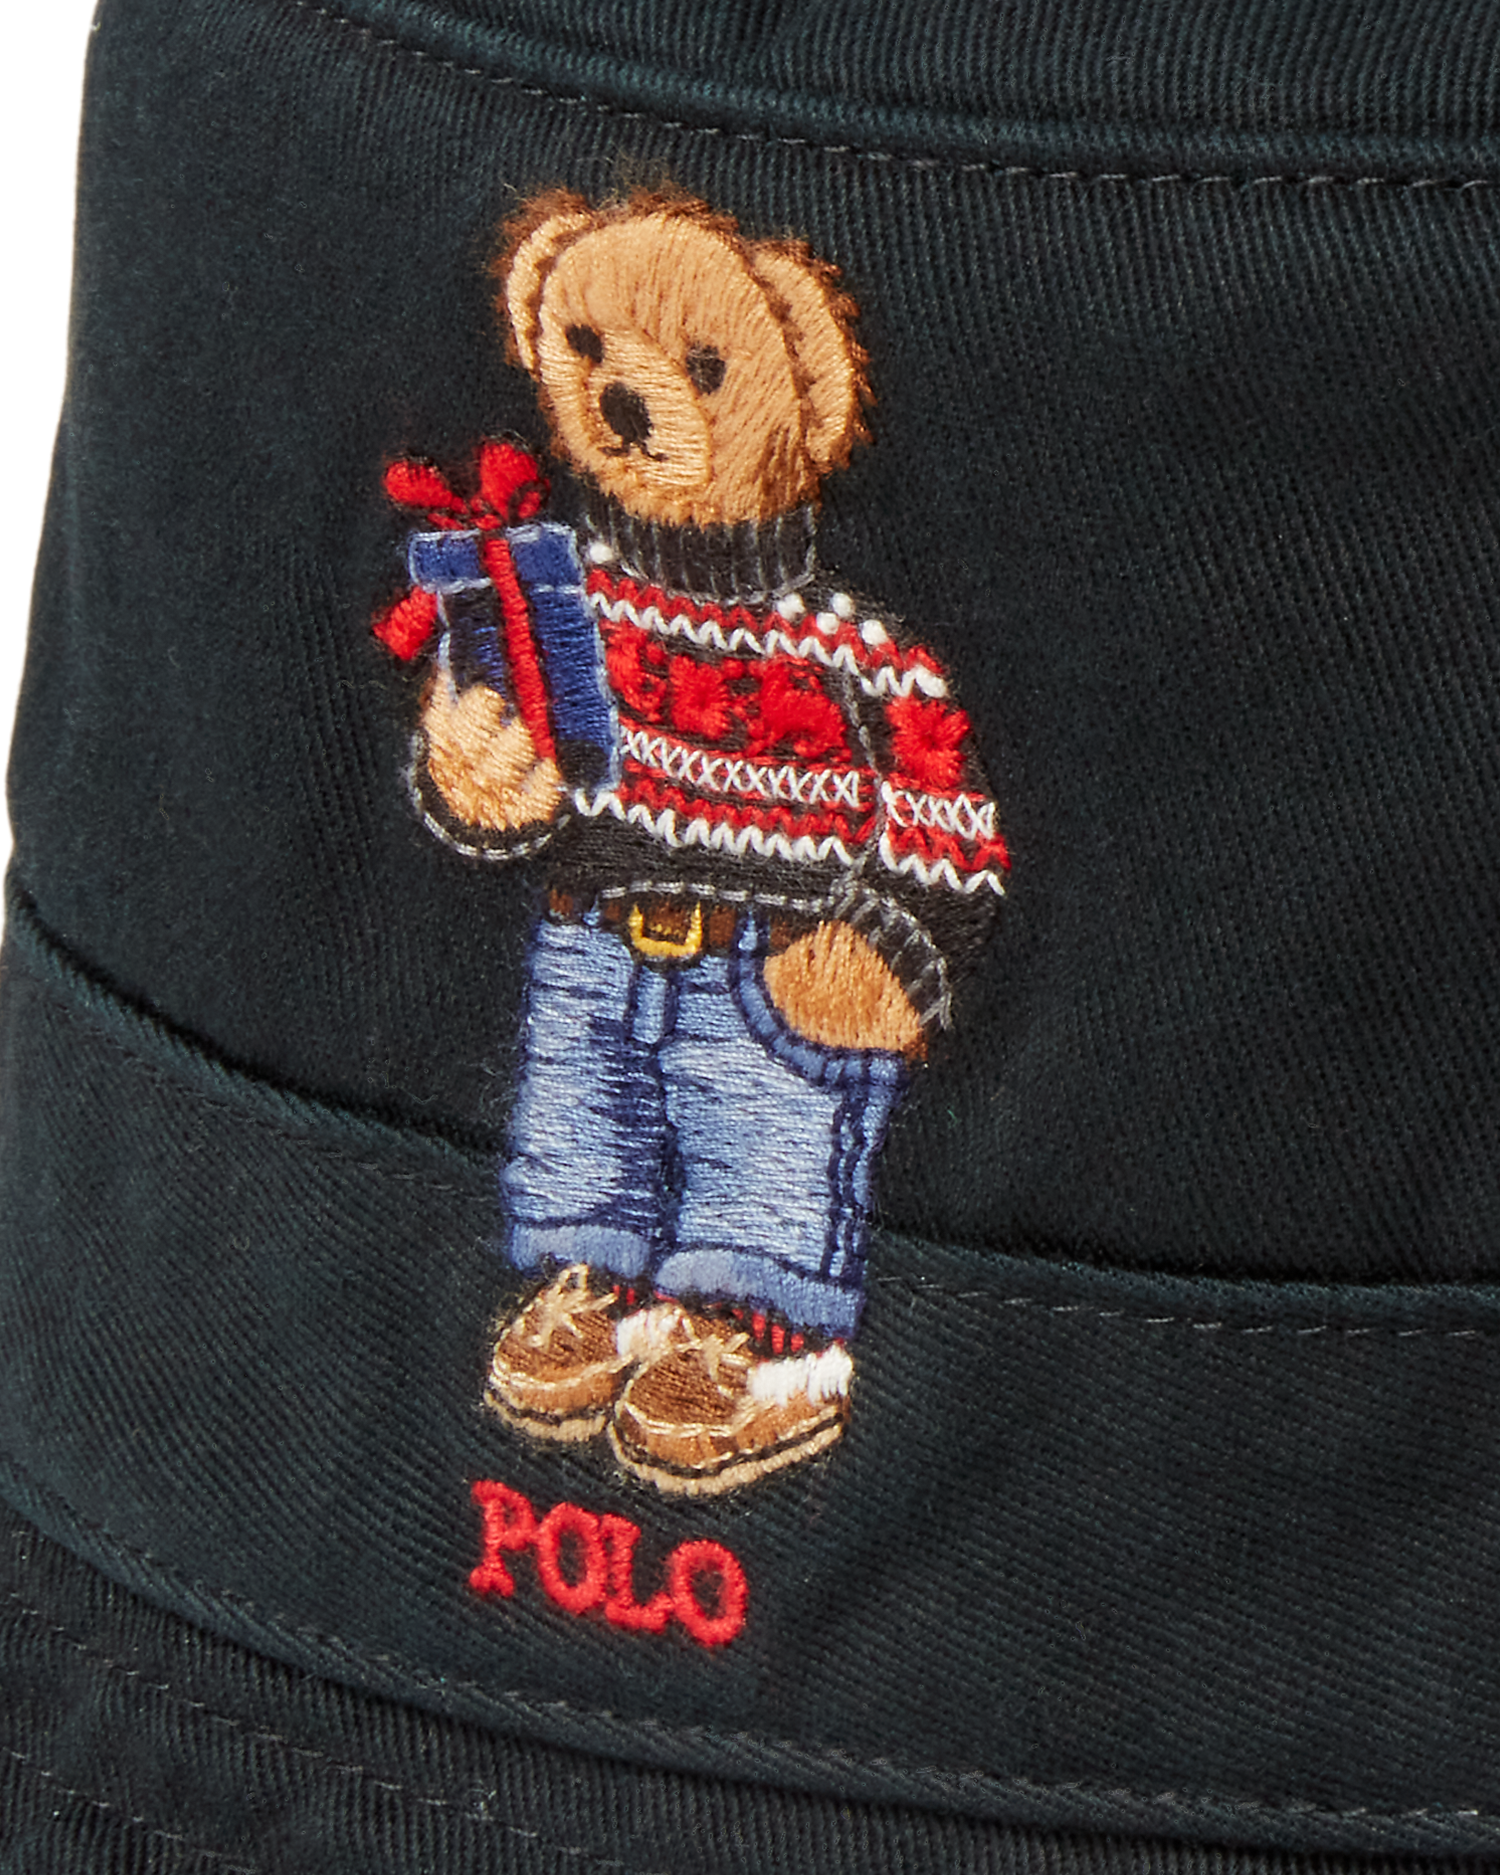 Polo Bear Twill Bucket Hat - Black